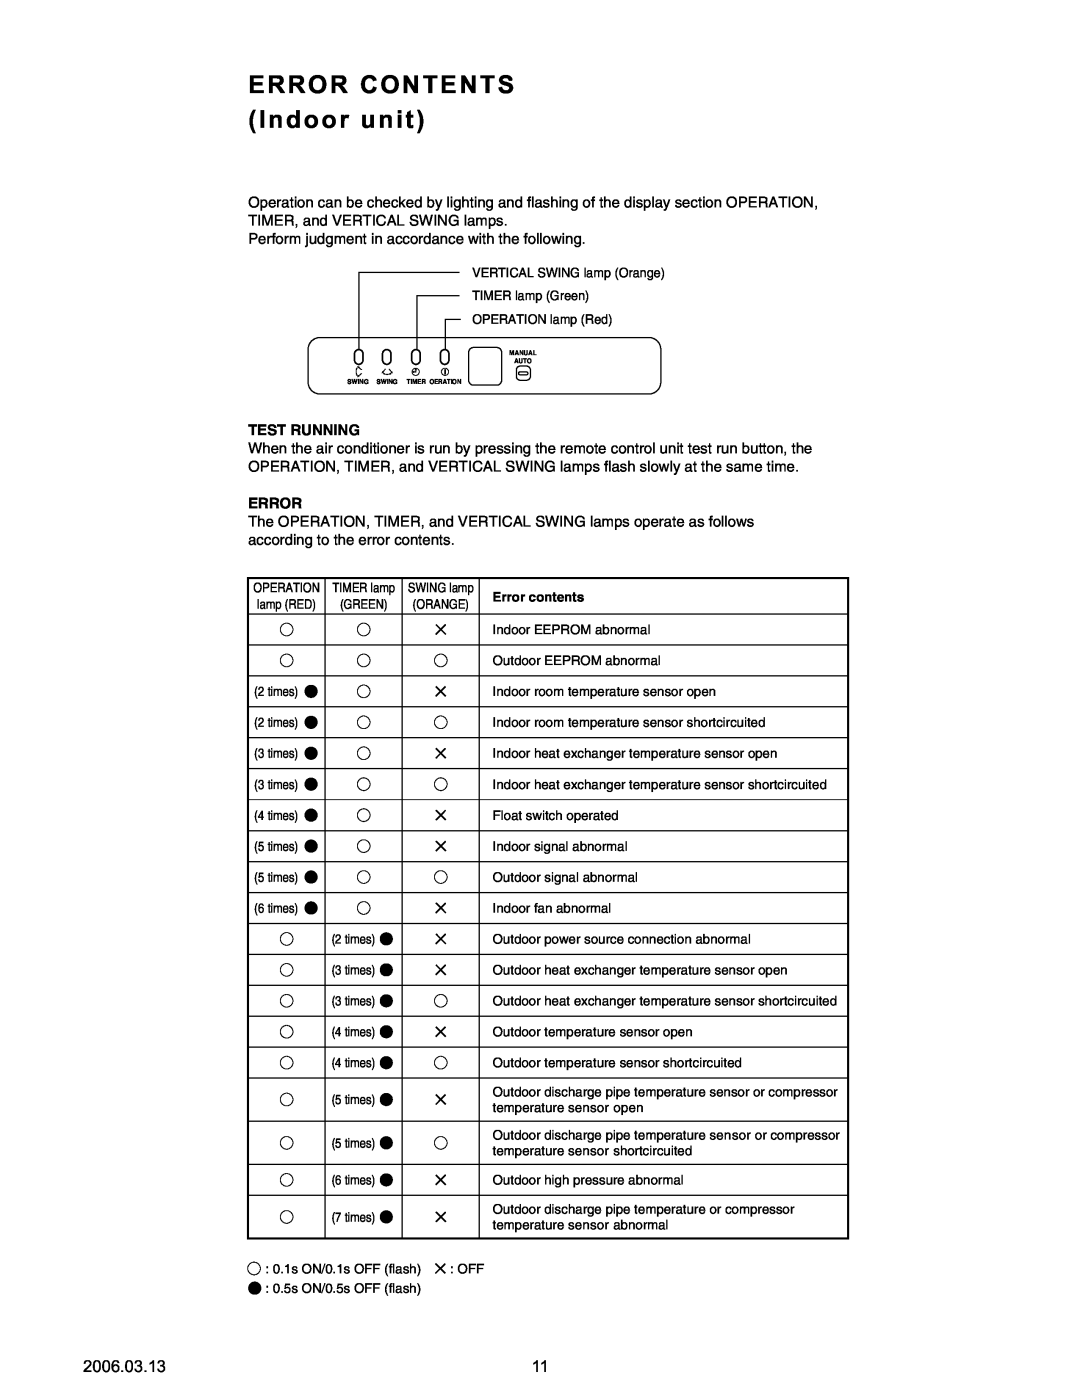 Friedrich MR36Y3F, MS36Y3F specifications ERROR CONTENTS Indoor unit, 2006.03.13, Test Running, Error 